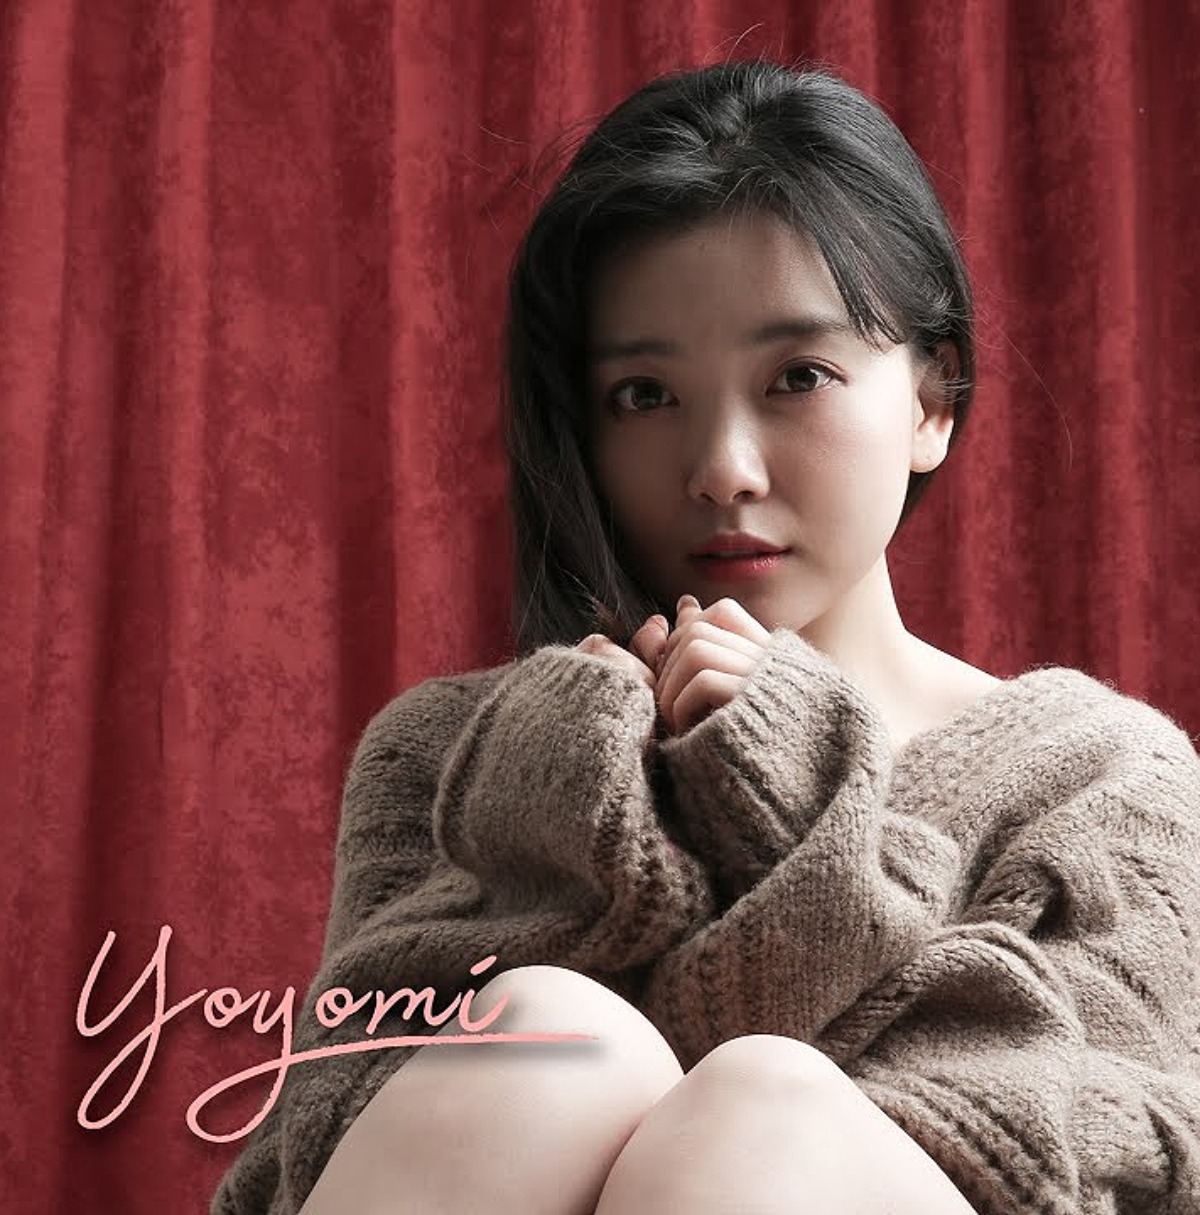 Singer Yoyomi